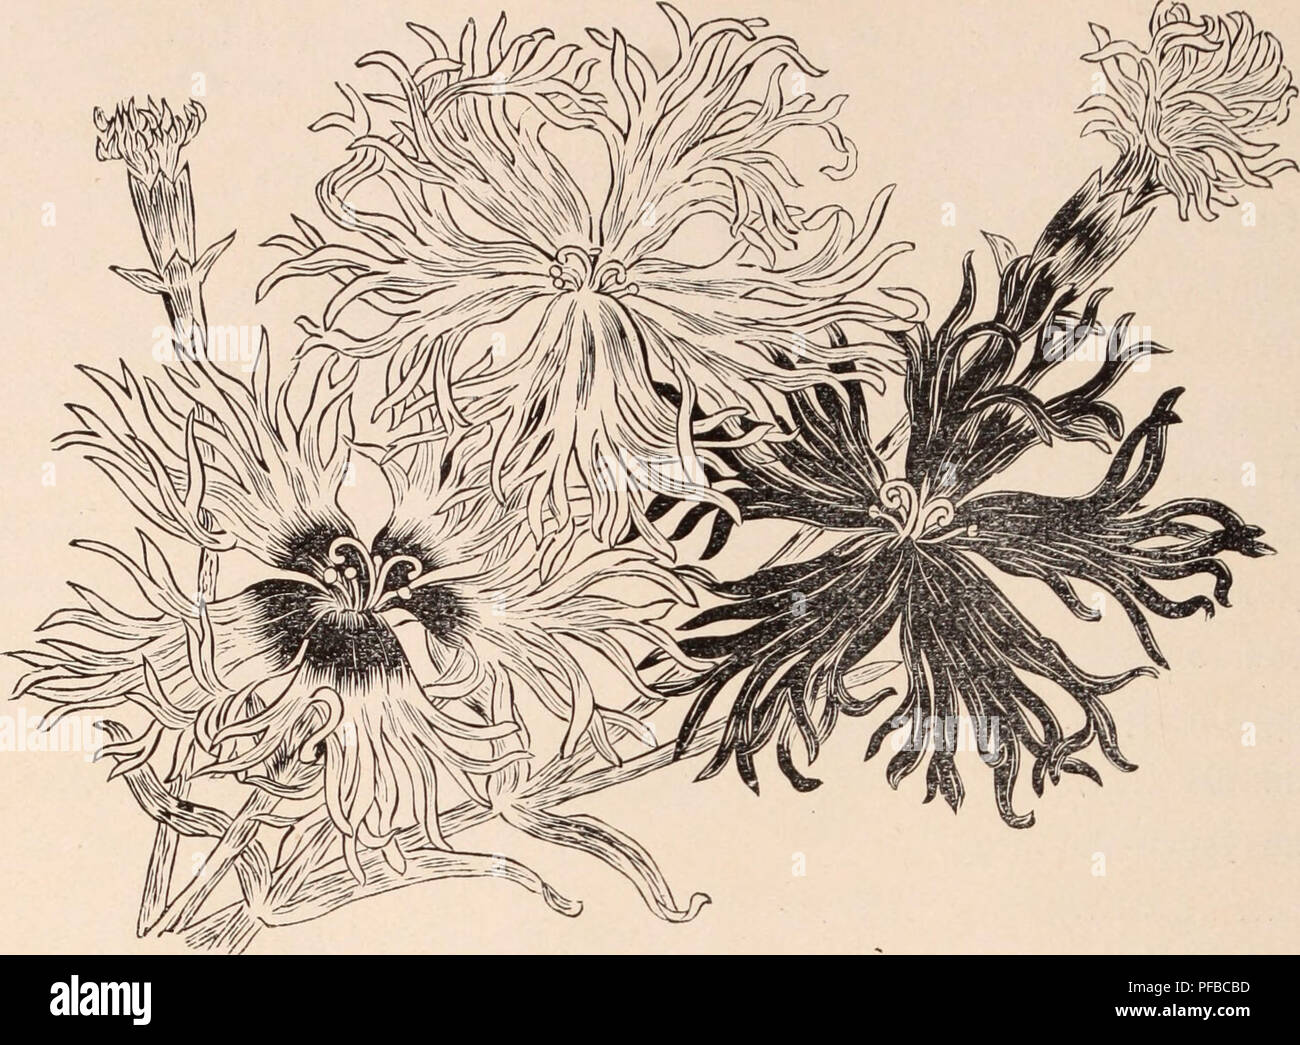 . Descriptive catalogue of flowering, ornamental trees, shrubs, bulbs, herbs, climbers, fruit trees, &amp;c., &amp;c., &amp;c. / for sale by the Yokohama Nursery Co., Limited.. Nursery Catalogue. 84 CATALOGUE OF THE YOKOHAMA NURSERY Co., Ltd. (1909).. DIANTHUS LACINIATUS MIRAT.ILIS per pound. Qiiercus Acuta... $.25 „ Cuspidata 25 Quercns Dentata 30 „ Glabra 25 Qiiercus Serrata .25 „ Phyllileoides 50 Baphiolepi8 Japonica 1.50 Rhus succedanea 80 „ Toxicodendron i 00 „ Vernicifera 80 Rliodotipos Kerrioides 1.50 Rosa MuUiflora, (Japanese wild rose) .. i .00 „ Wichiiraiana 1.50 „ Rugosa 2.00 Sanibu Stock Photo